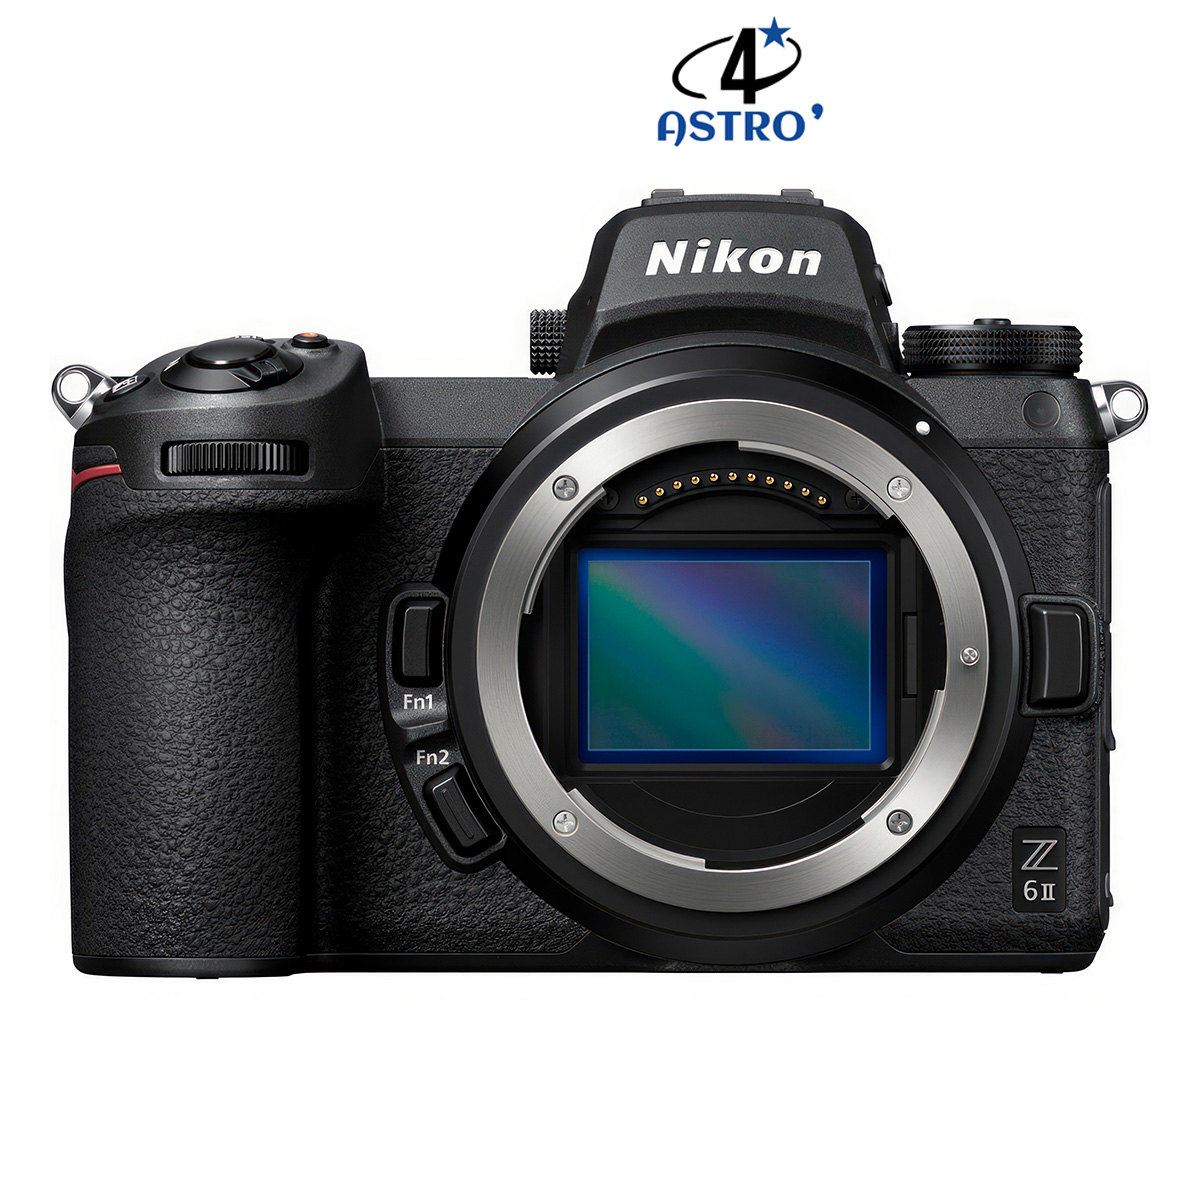 Hybride Nikon Z6II neuf défiltré + refiltré 4'Astro Défiltrage 4'Astro